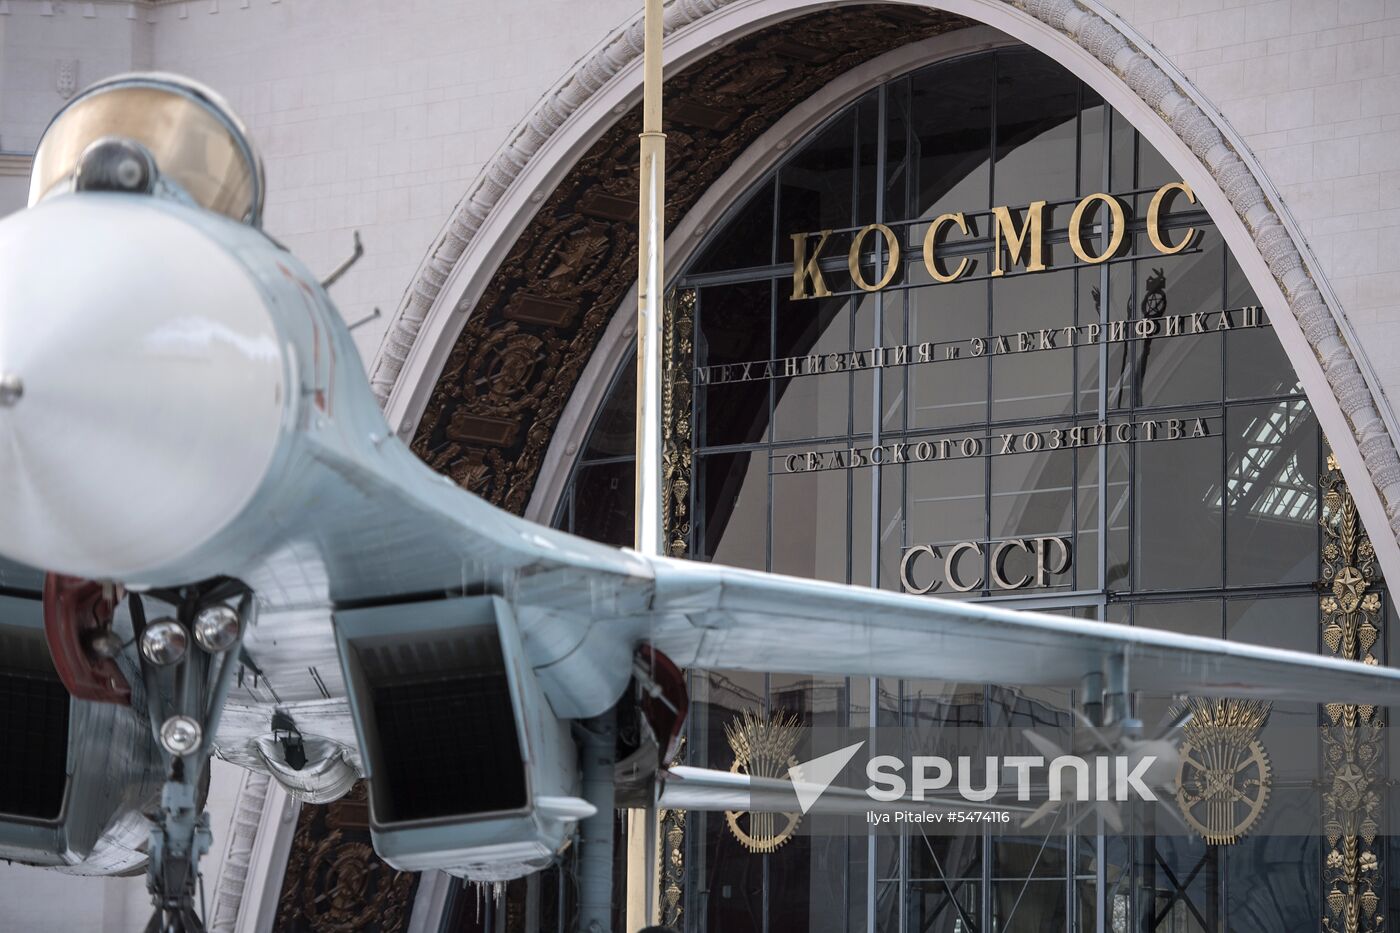 Cosmonautics and Aviation Center at VDNKh